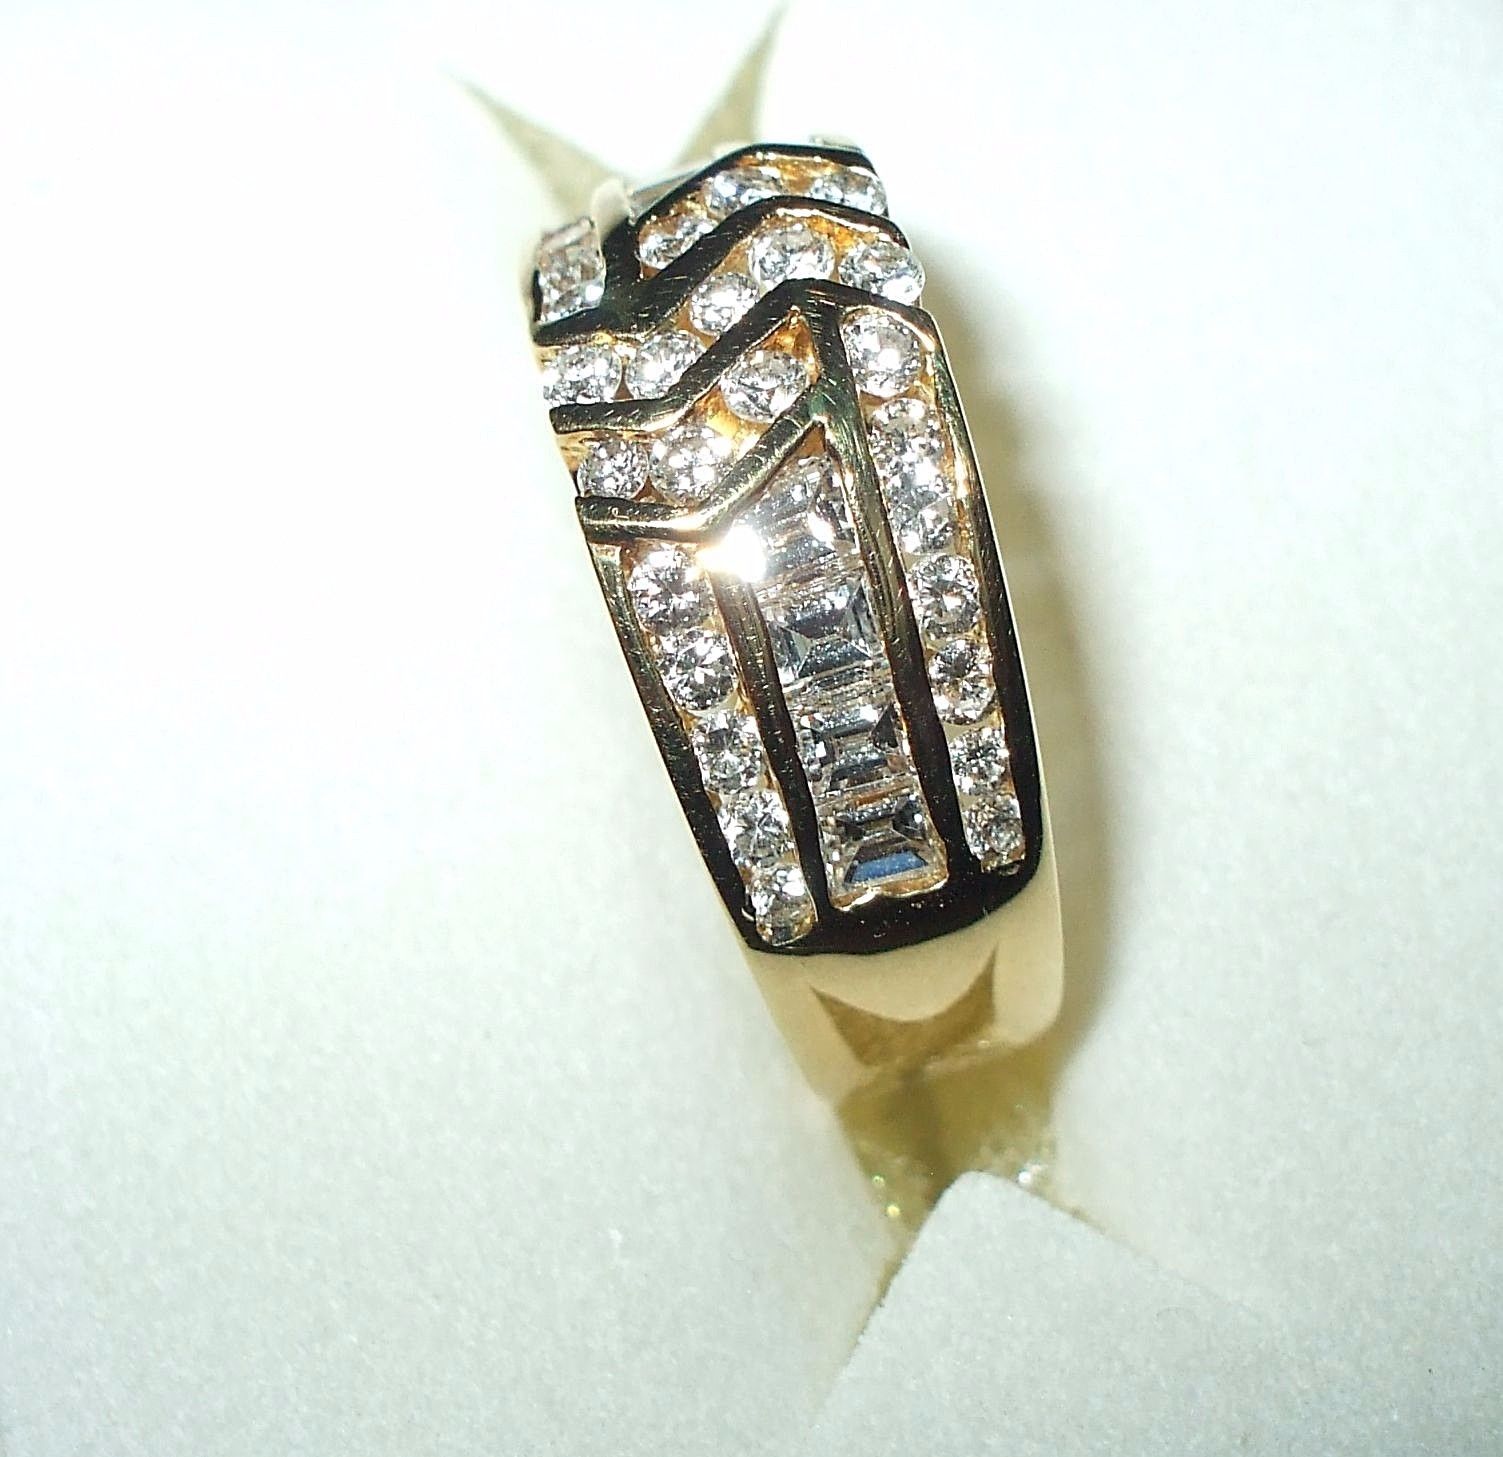 Genuine 1.11 cttw Diamond Ring 18K yellow gold $3996 NWT